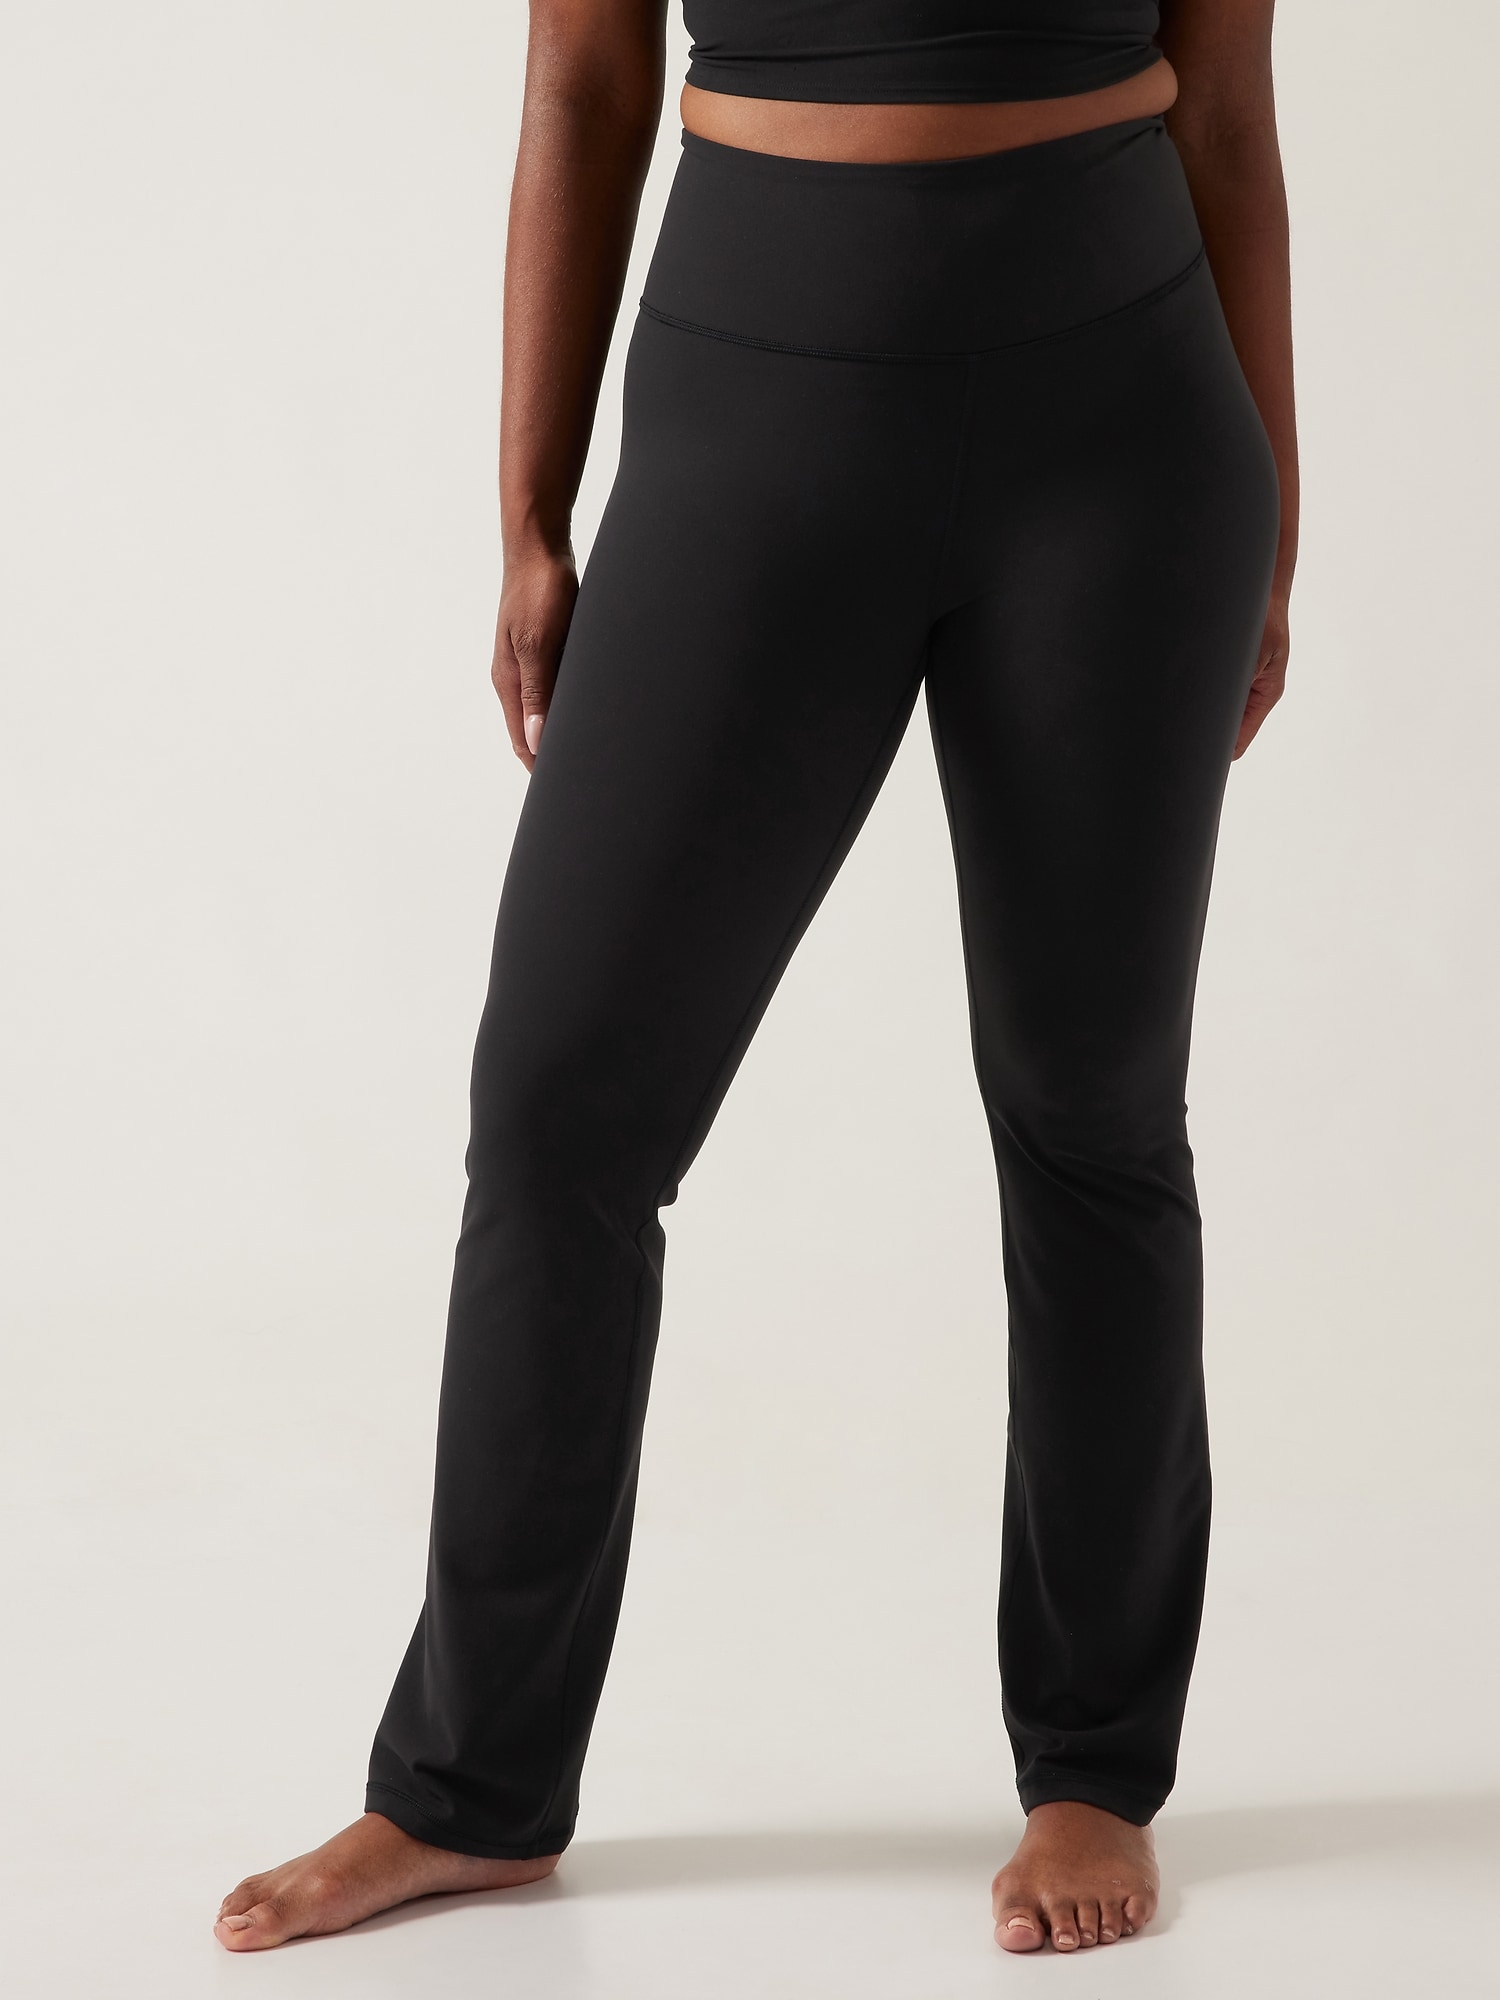 NWT Women's Athleta Elation Straight Leg Black Pants Size Medium